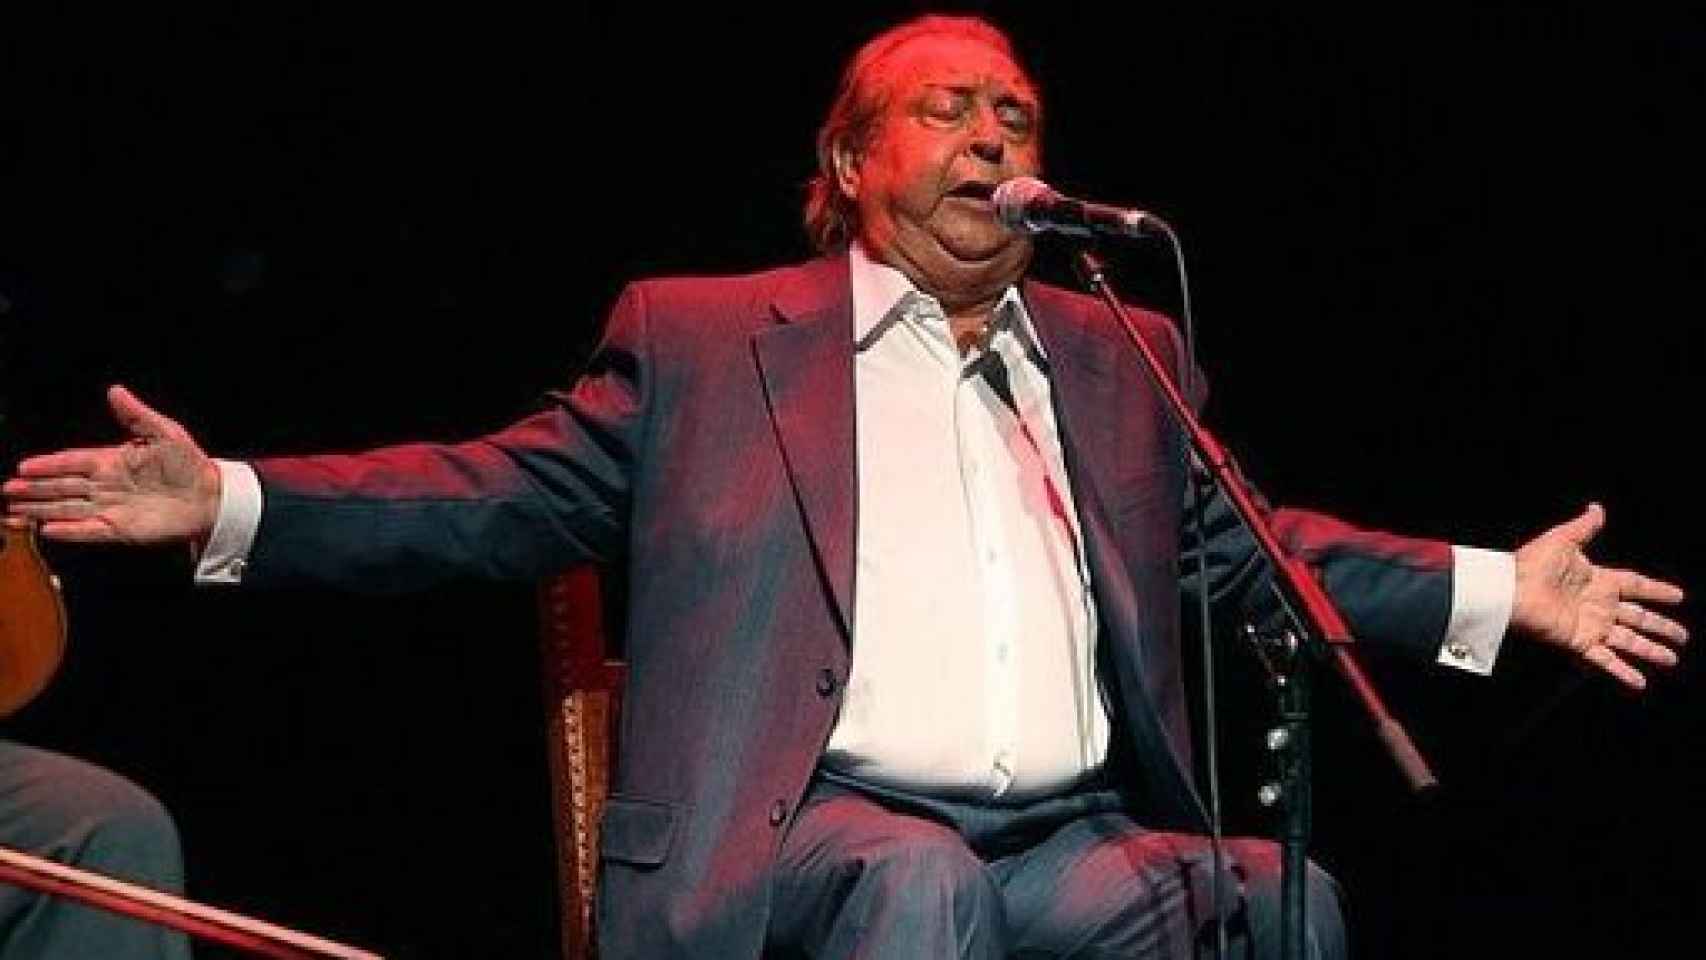 Image: Muere el cantaor Juan Peña 'El Lebrijano'